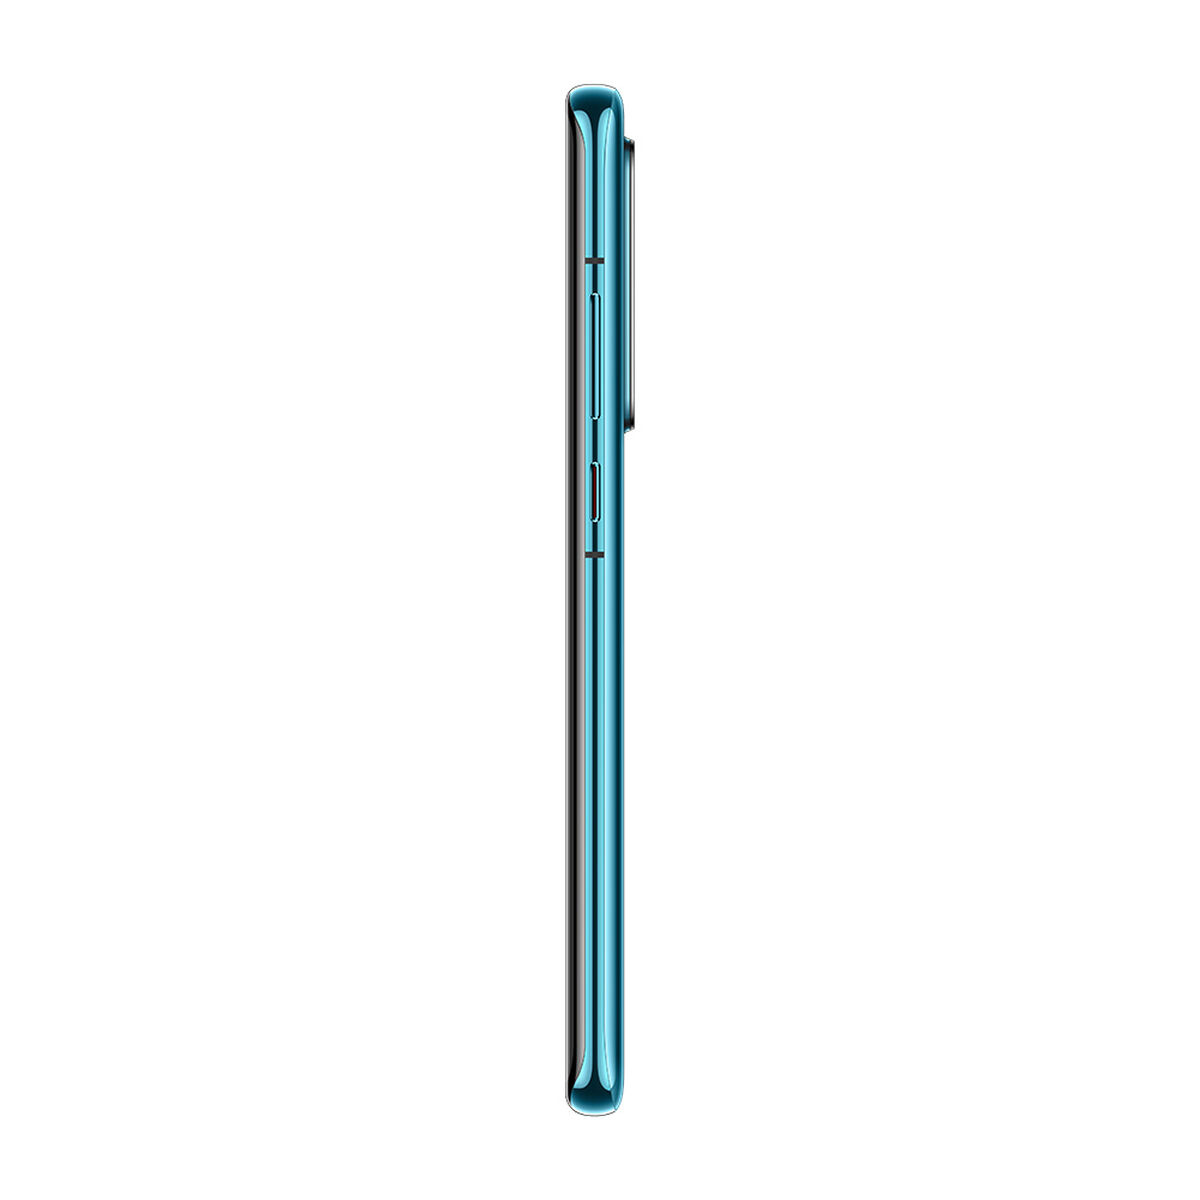 Celular Huawei P40 Pro 256GB 6,6" Deep Sea Blue + Freebuds 3 + Cargador Inalámbrico SuperCharge + 50GB Huawei Cloud